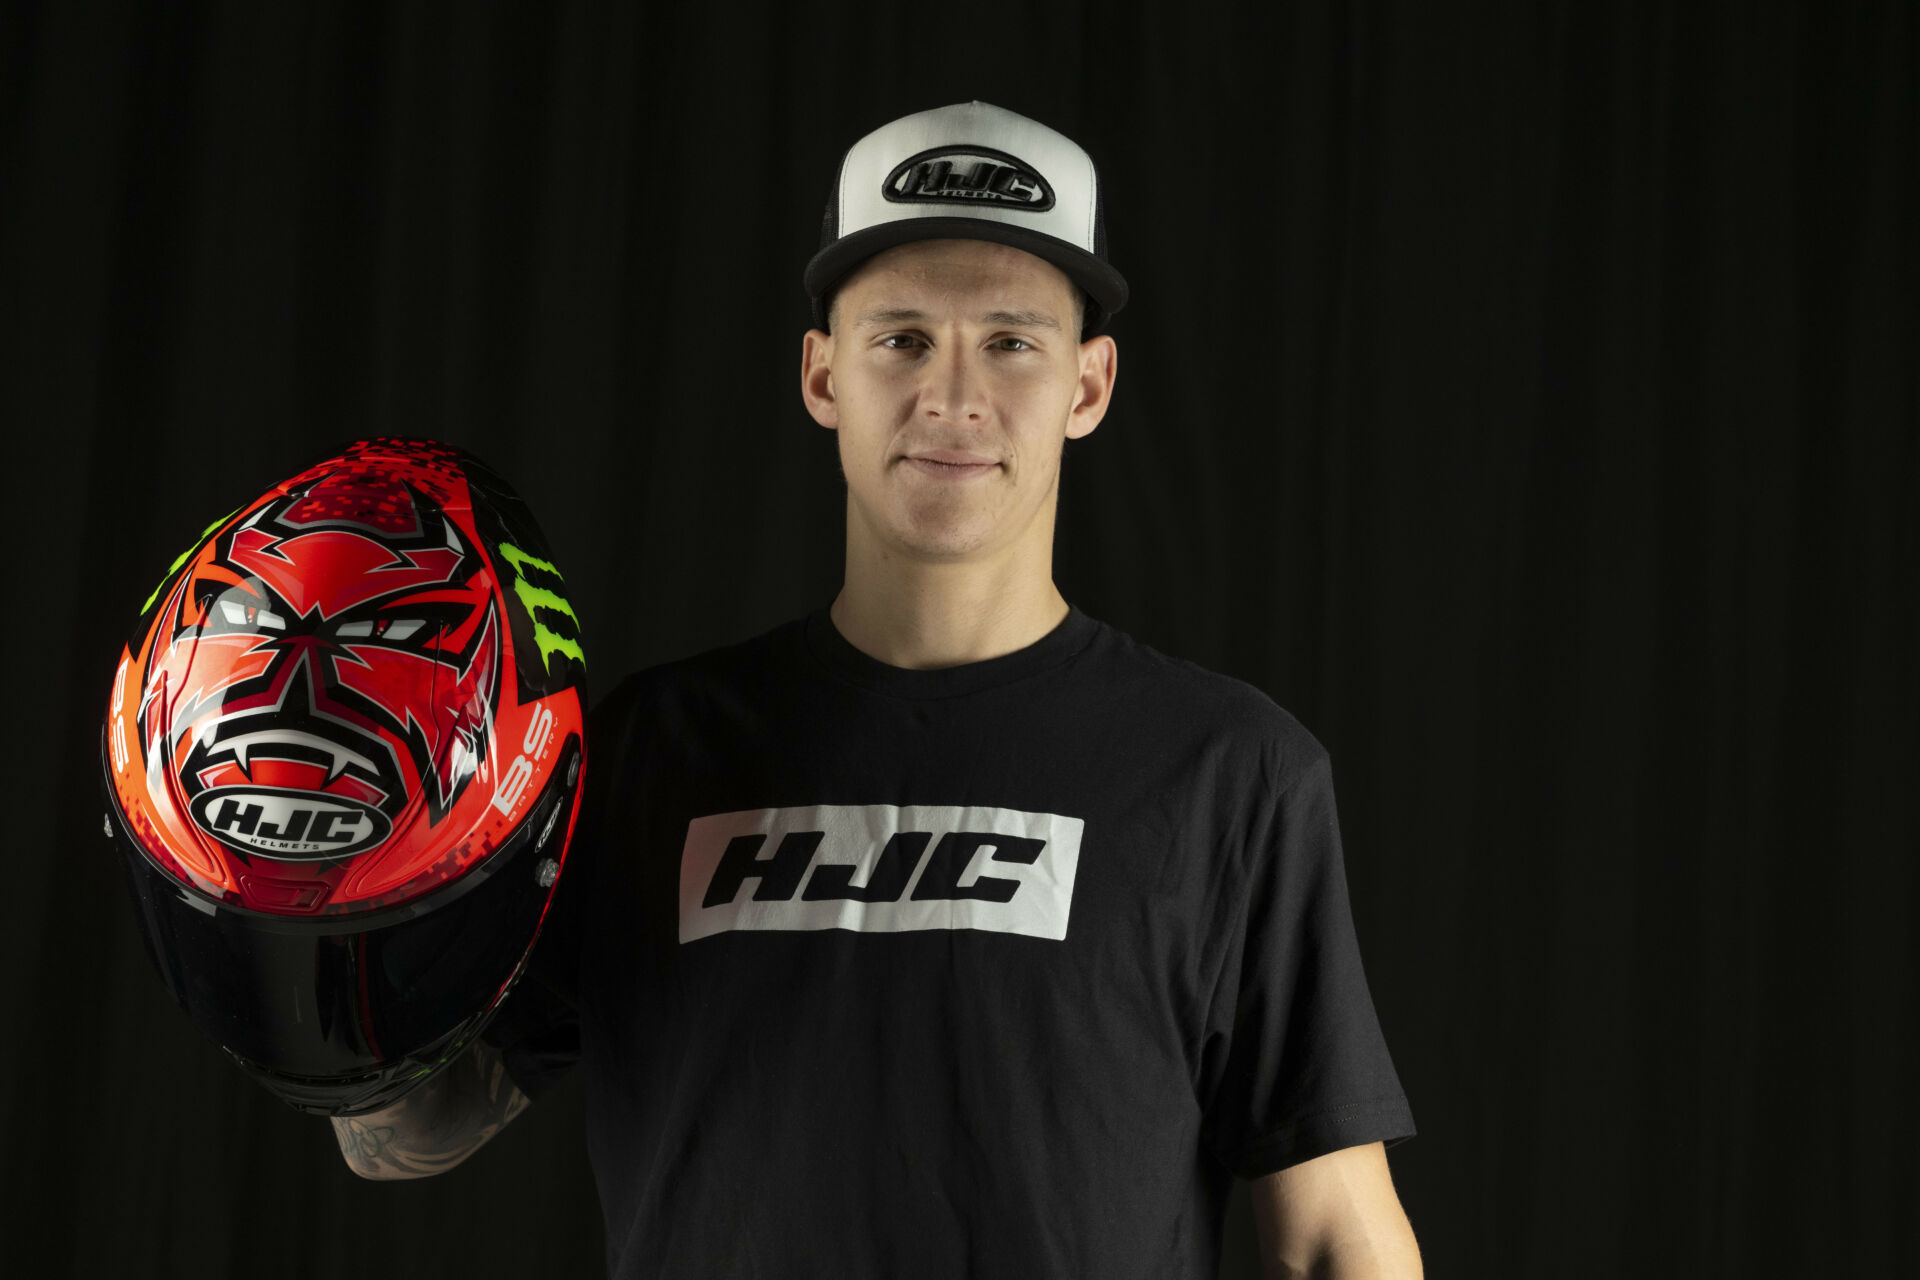 2021 MotoGP World Champion Fabio Quartararo with his new HJC helmet. Photo courtesy HJC Helmets.